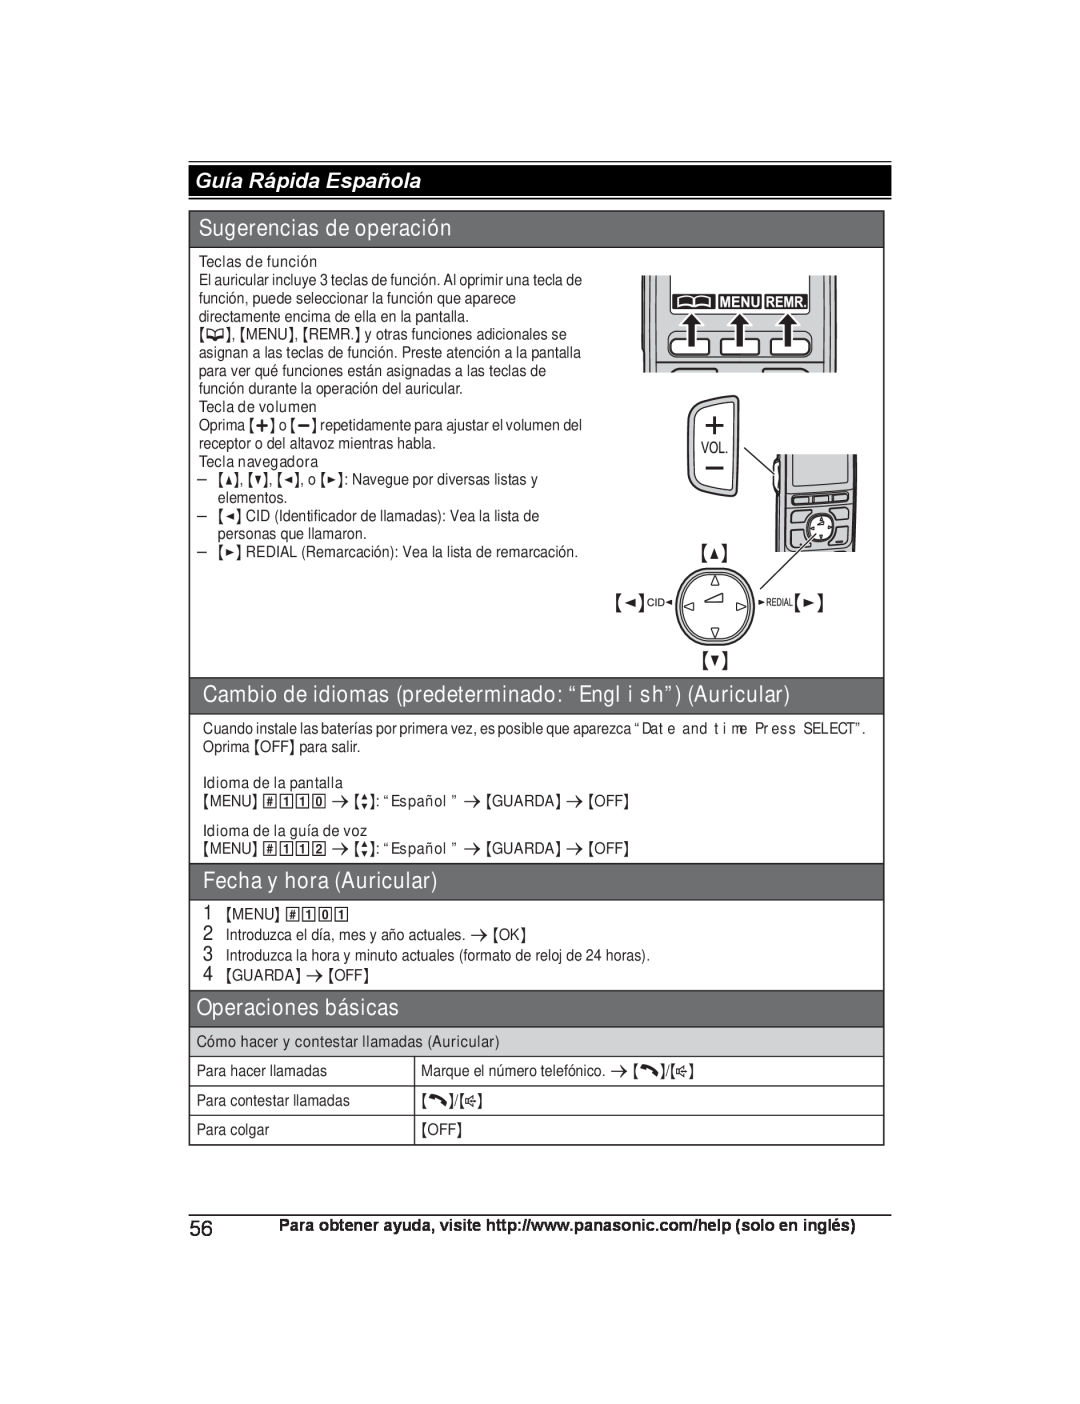 Panasonic KX-TG4741 Sugerencias de operación, Cambio de idiomas predeterminado “English” Auricular, Fecha y hora Auricular 